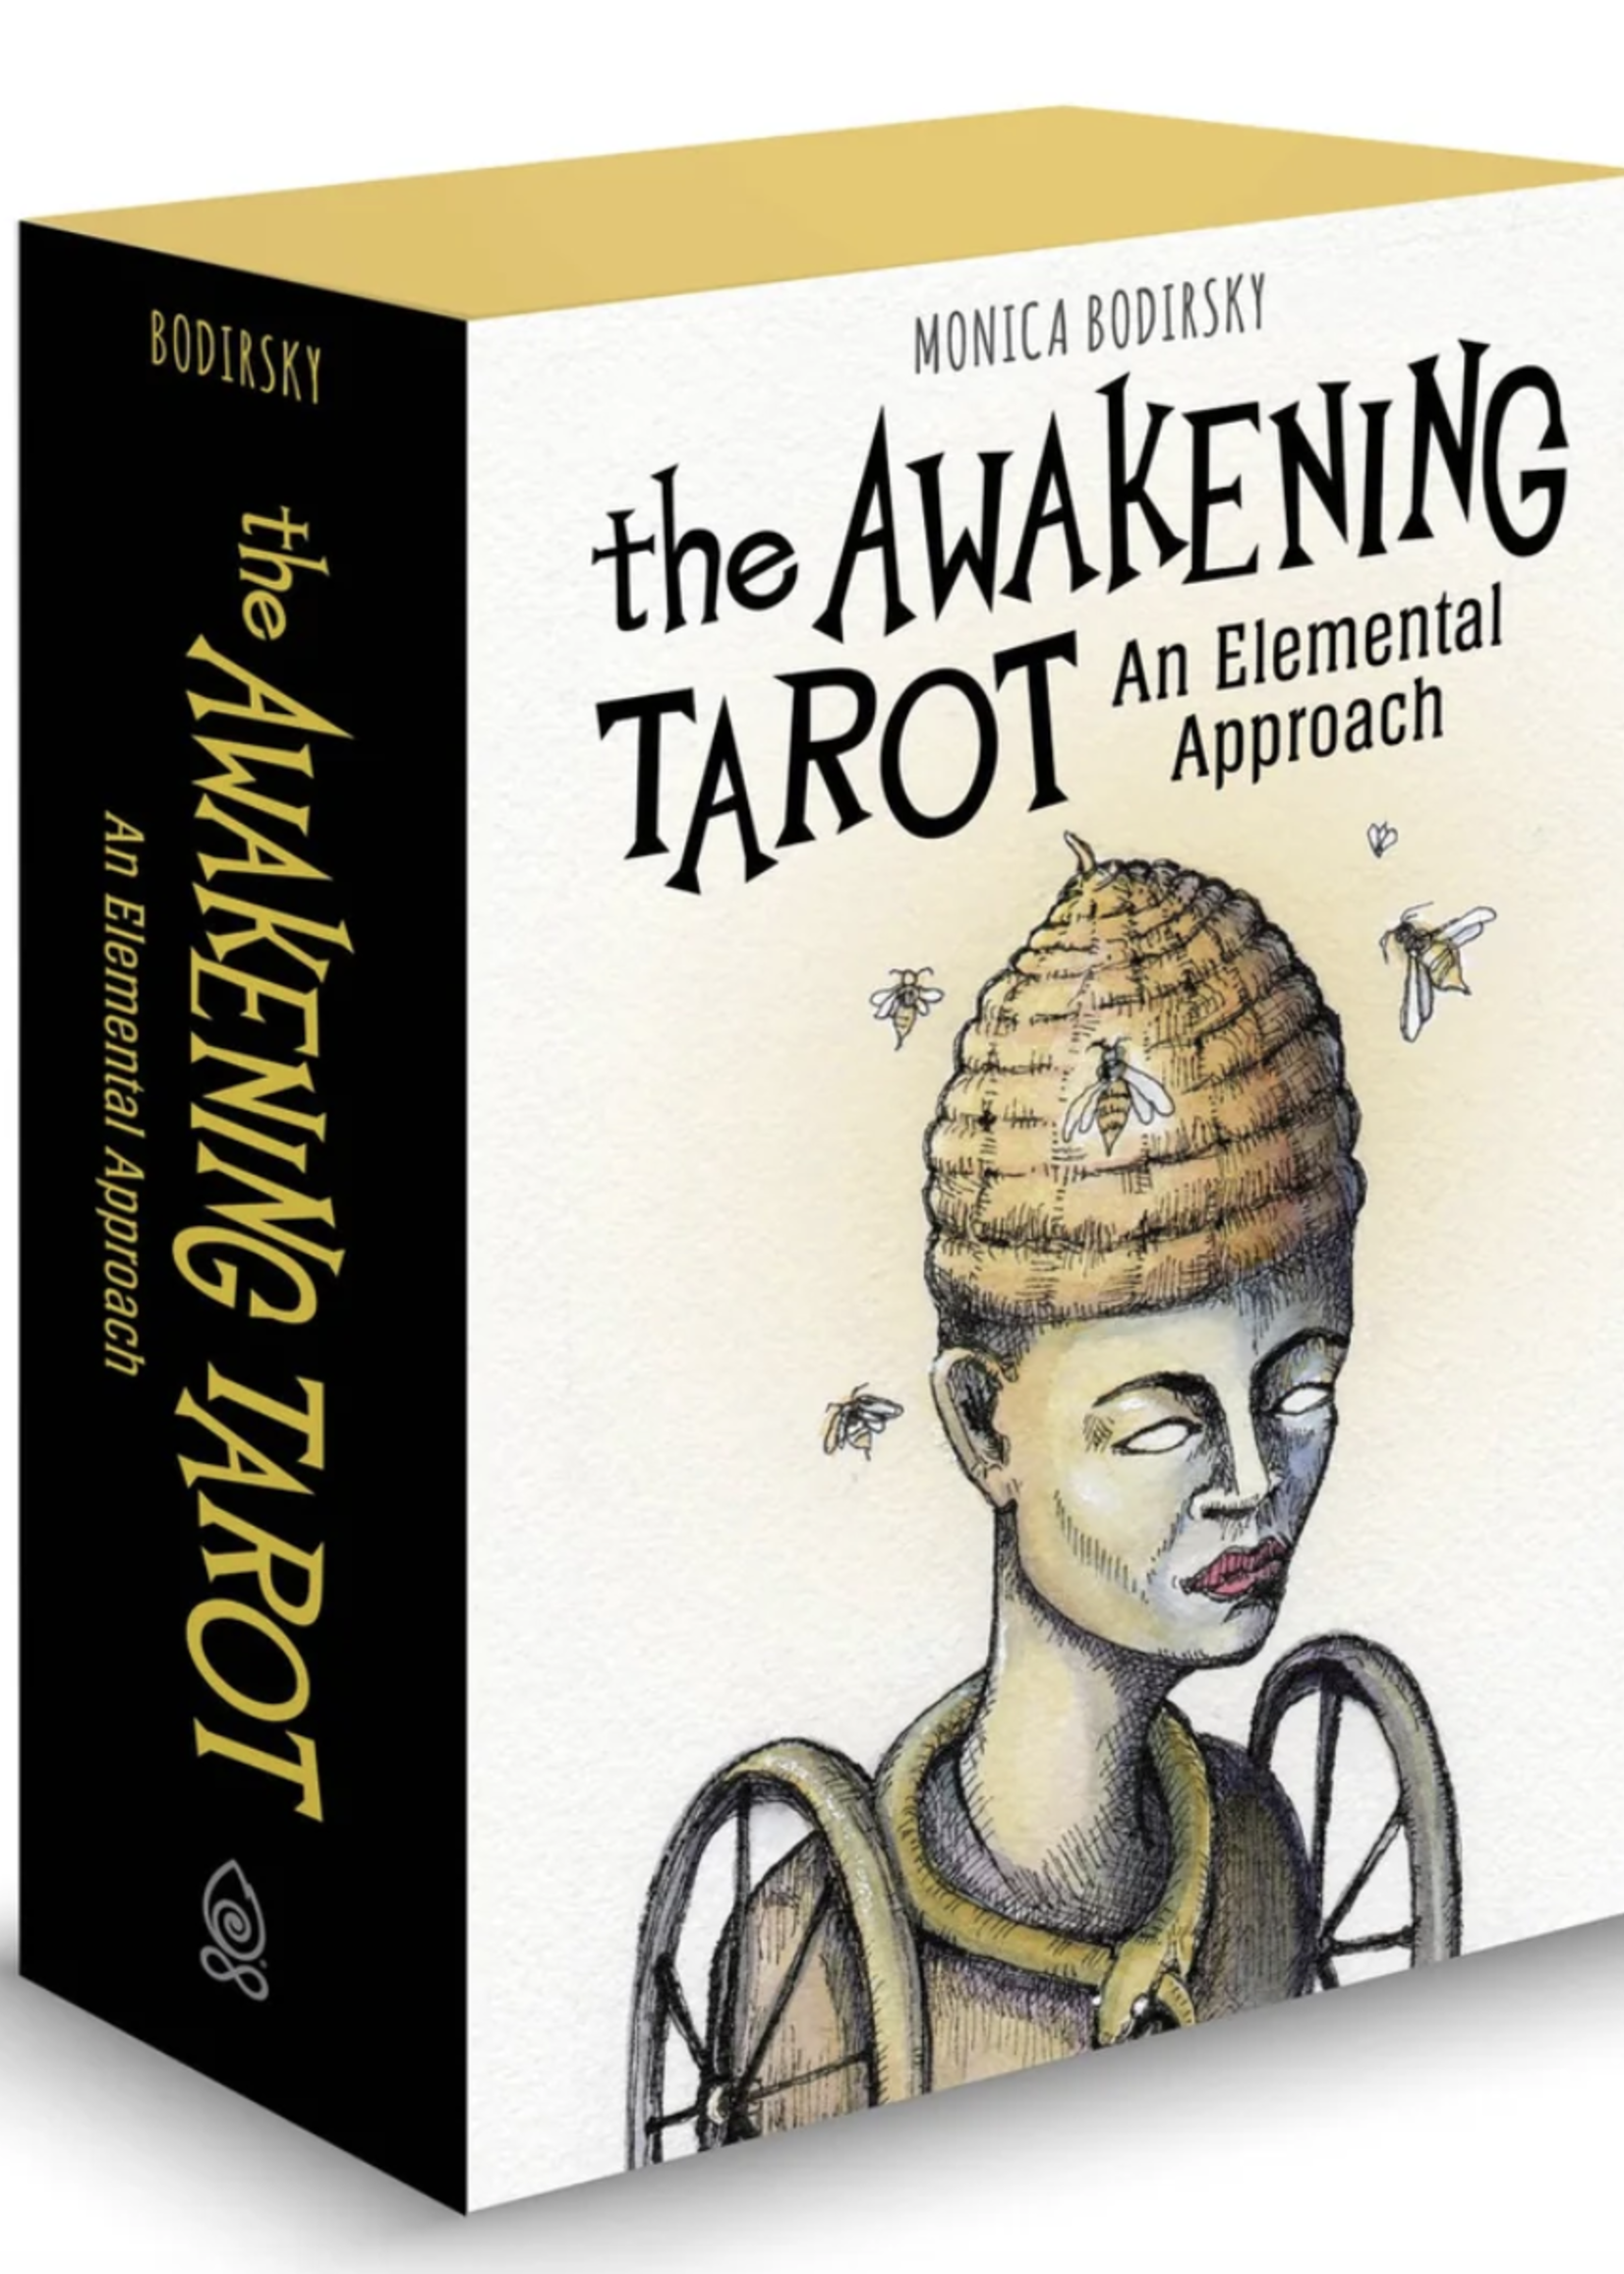 Monica Bodirsky The Awakening Tarot - An Elemental Tarot